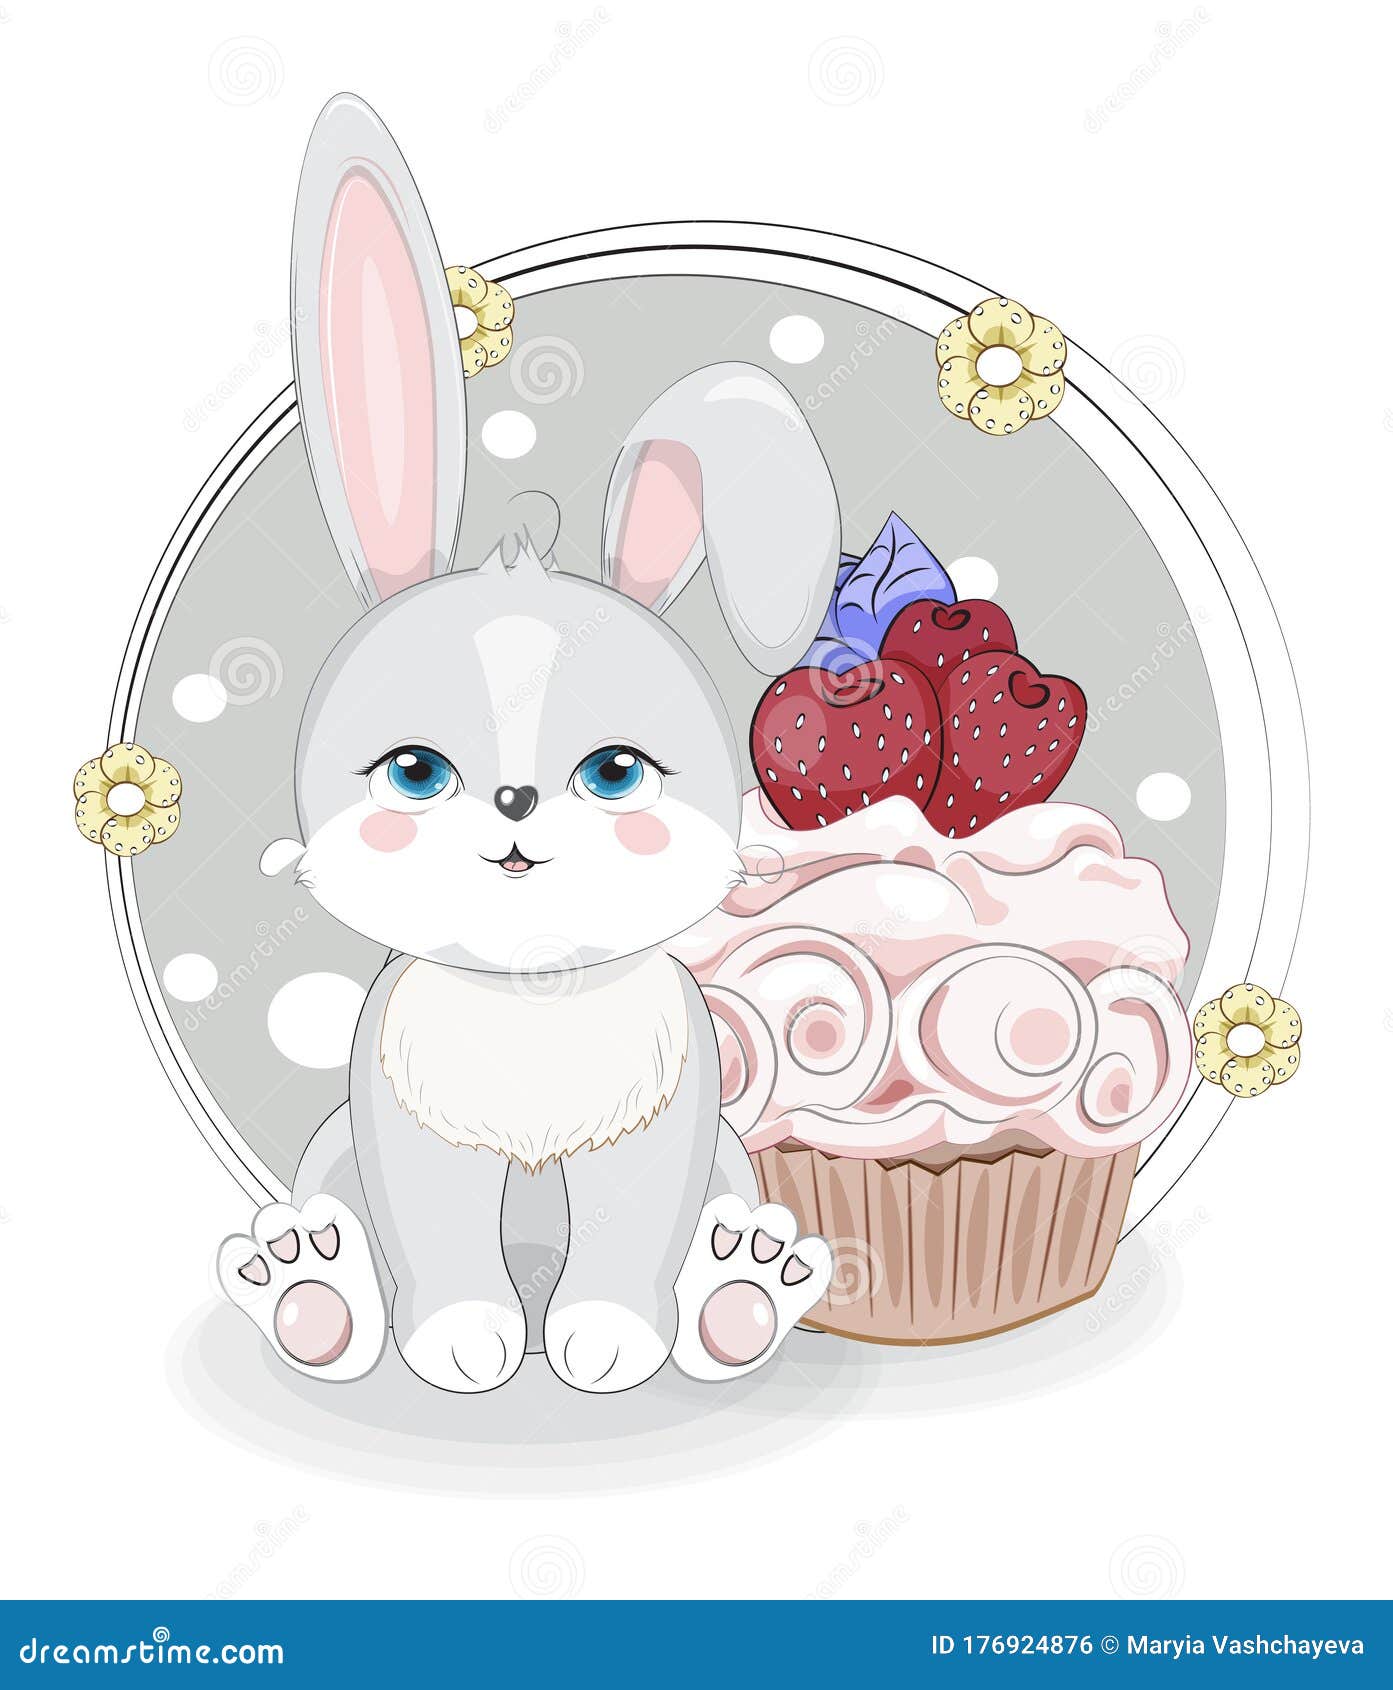 Rabbit and cupcake stock vector. Illustration of cartoon - 176924876